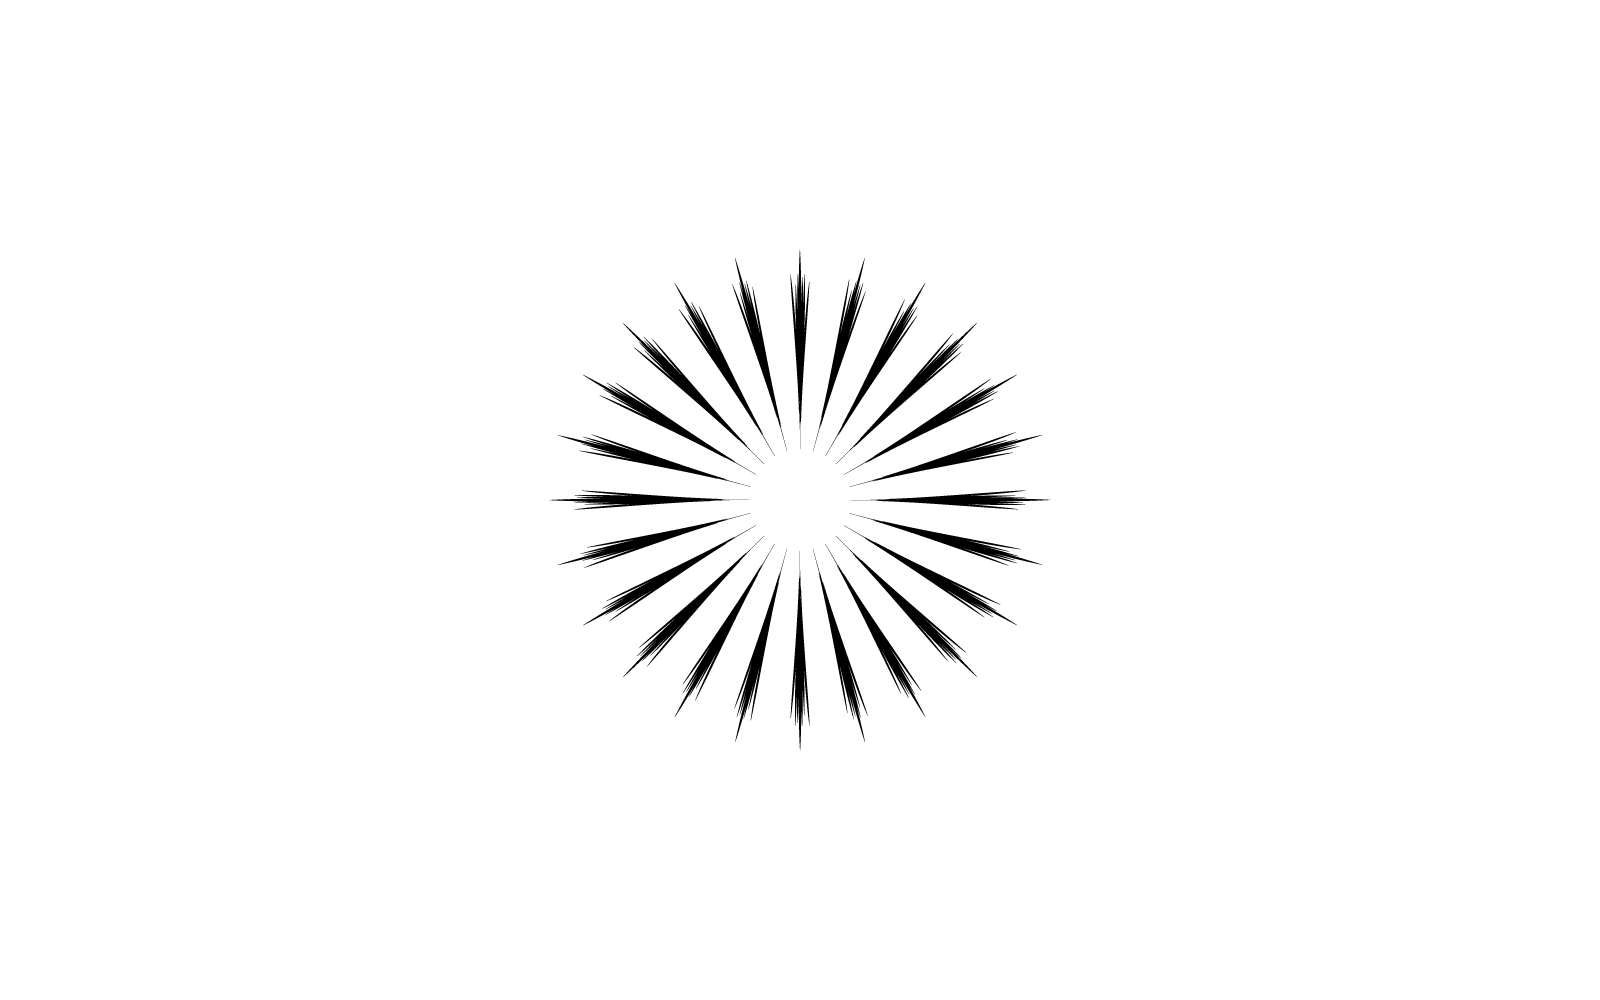 Sunburst ikona ilustracja wektorowa Płaska konstrukcja